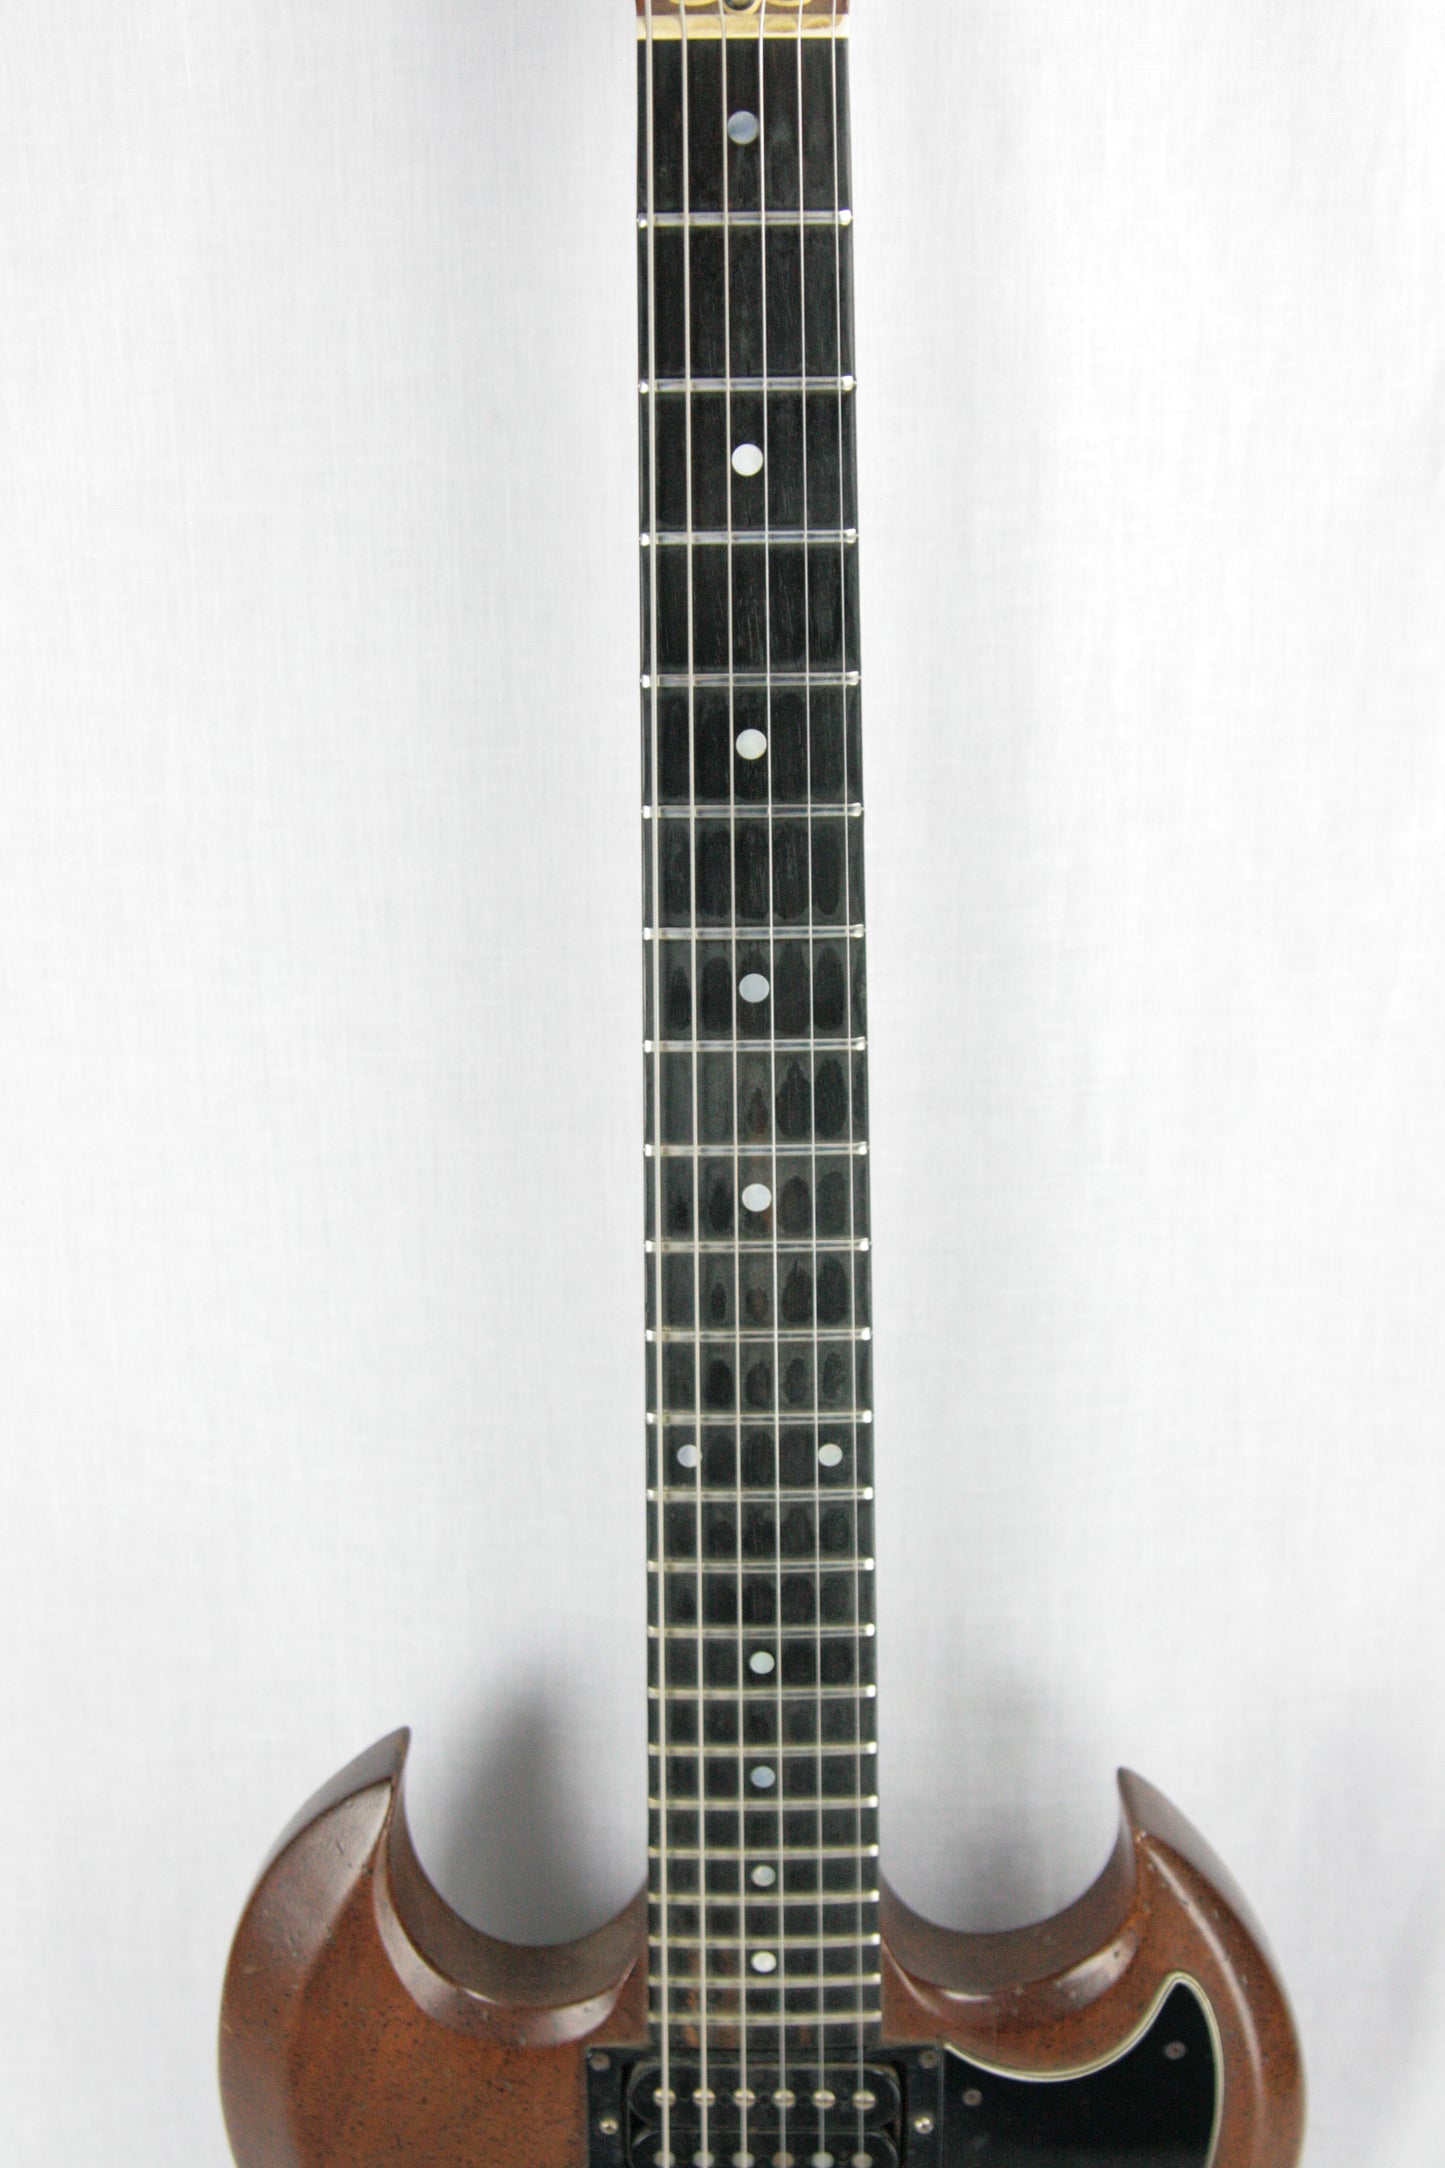 1980 Gibson SG Firebrand in the Rare Speckled Finish! Ebony Board! Les Paul